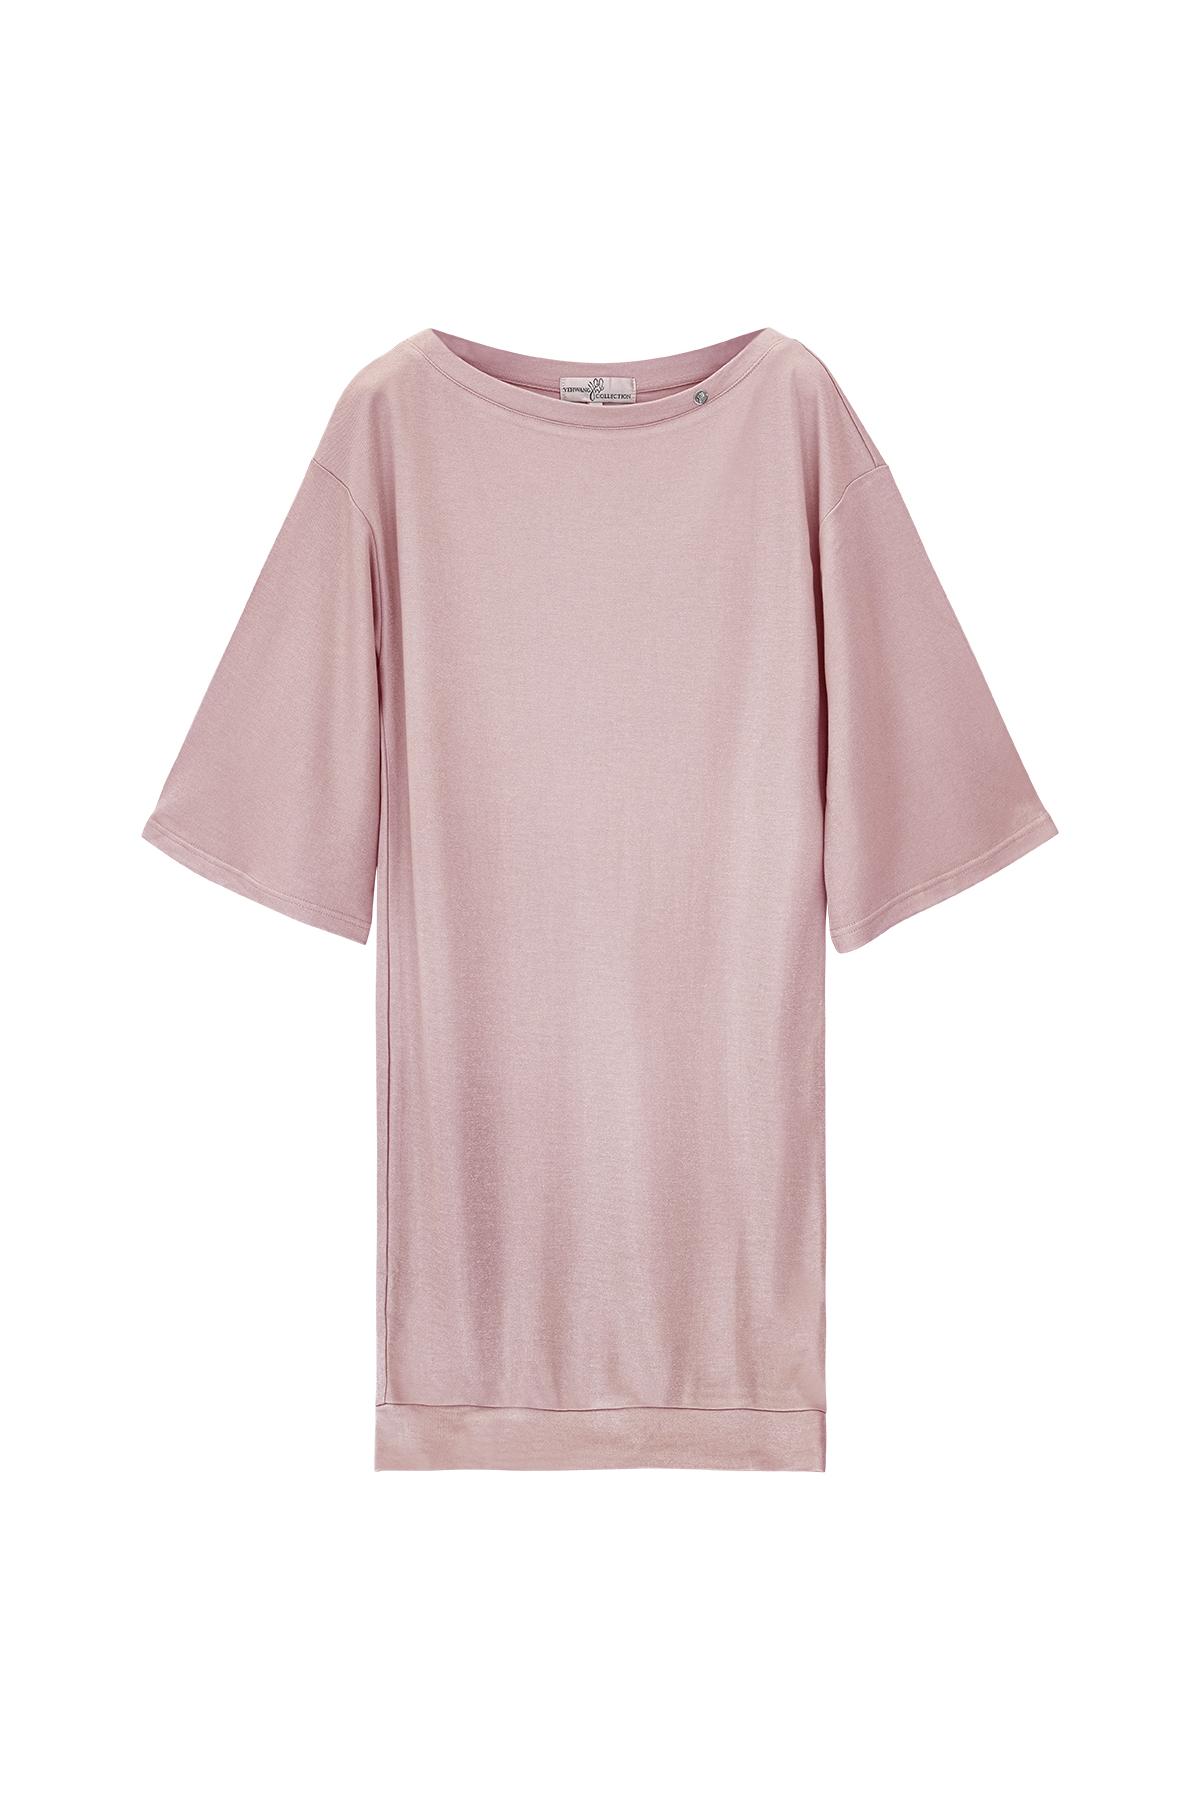 Parlak kaplamalı tişört elbise Pink S h5 